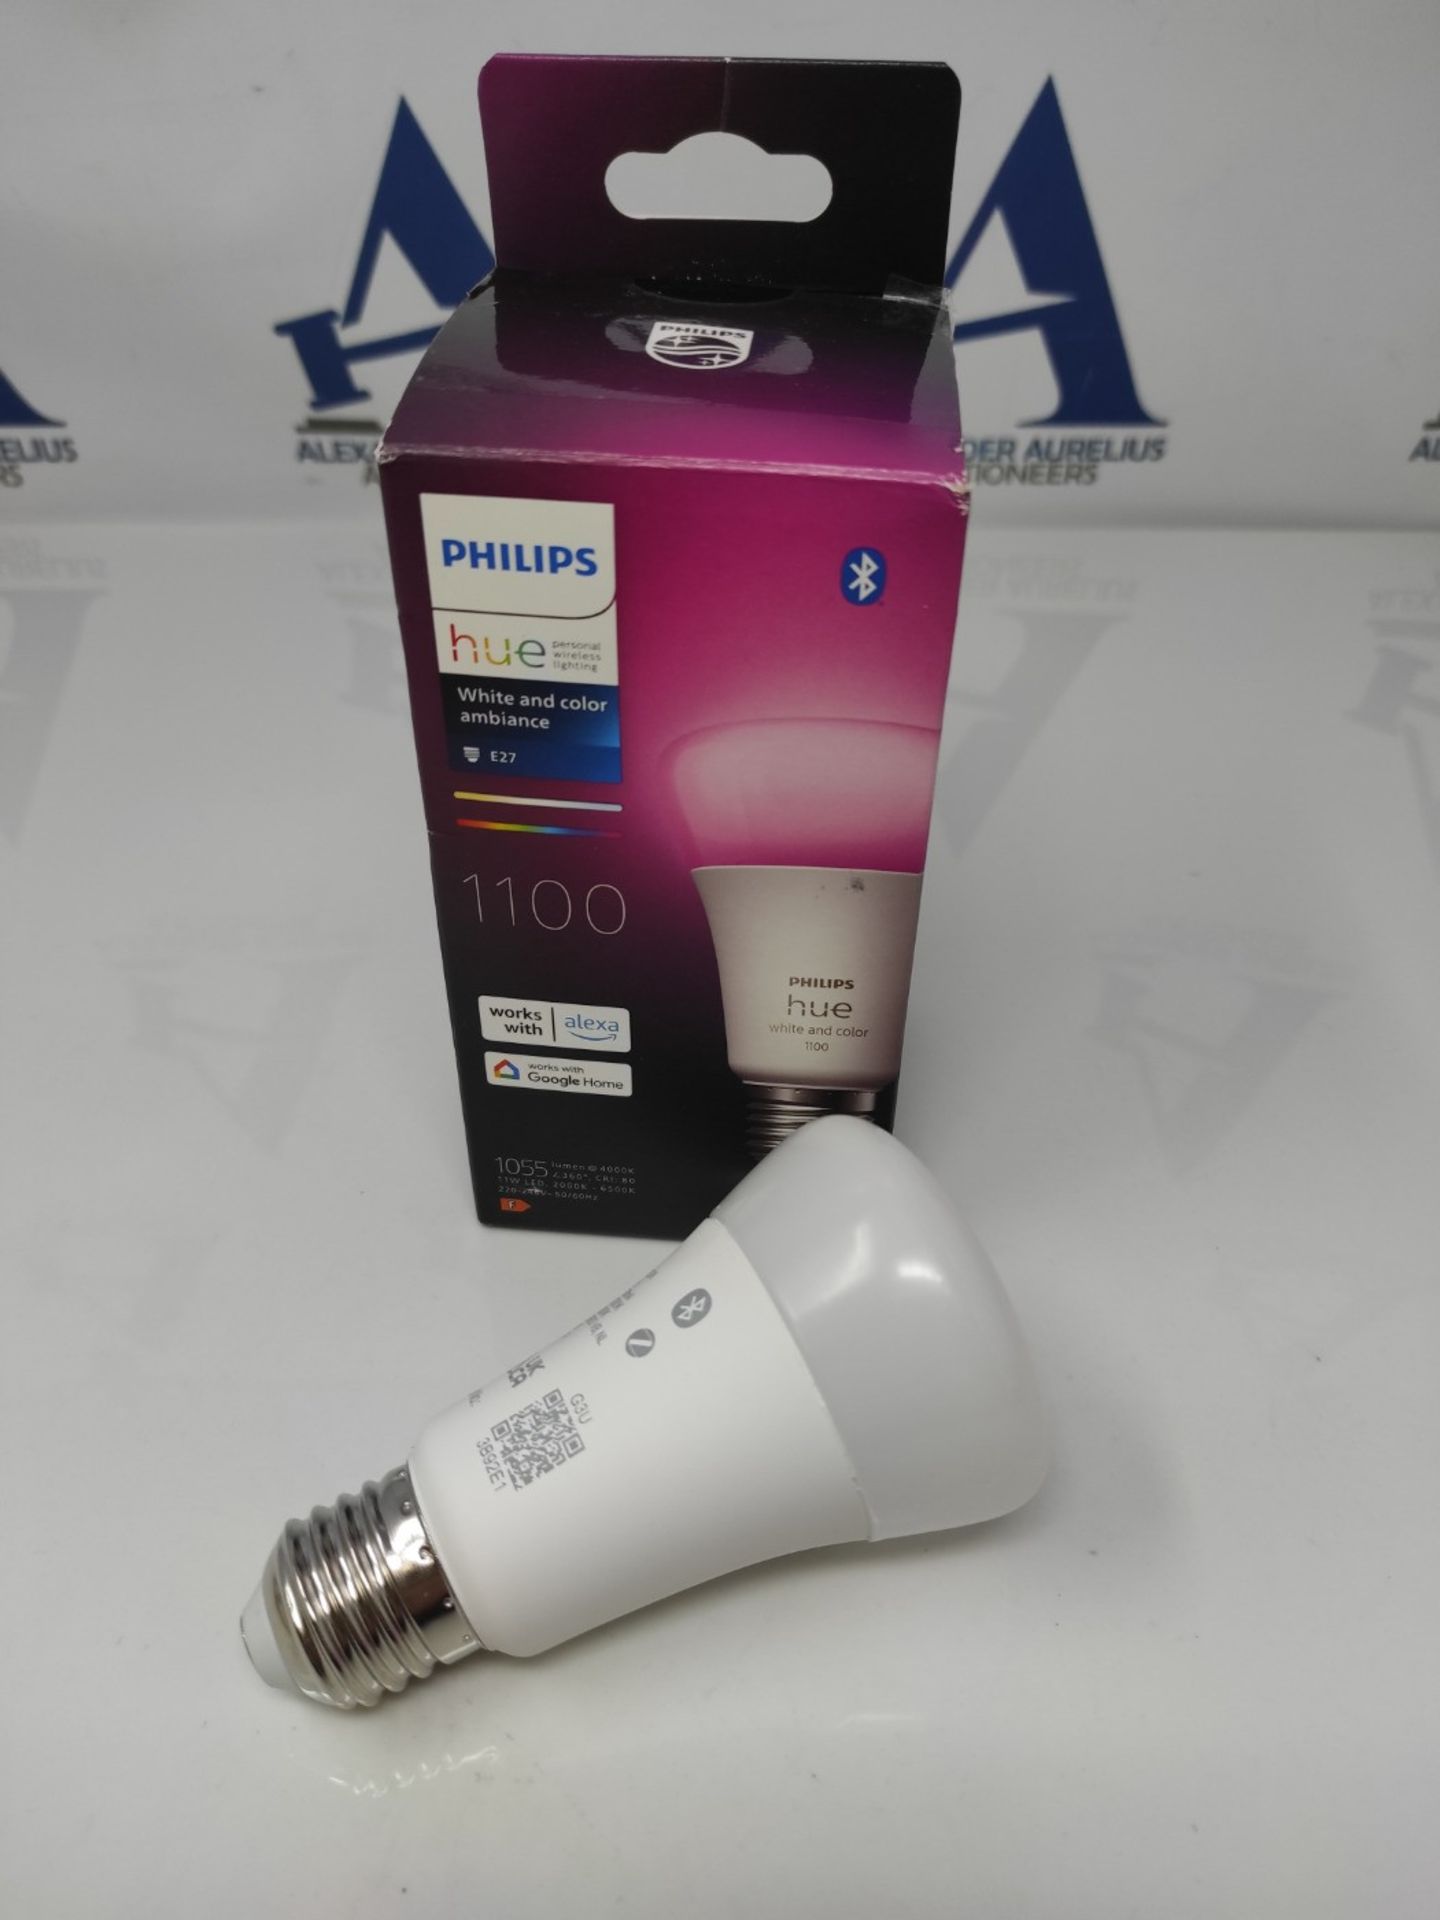 Philips Hue NEW White and Colour Ambiance Smart Light Bulb 75W - 1100 Lumen [E27 Ediso - Image 2 of 2